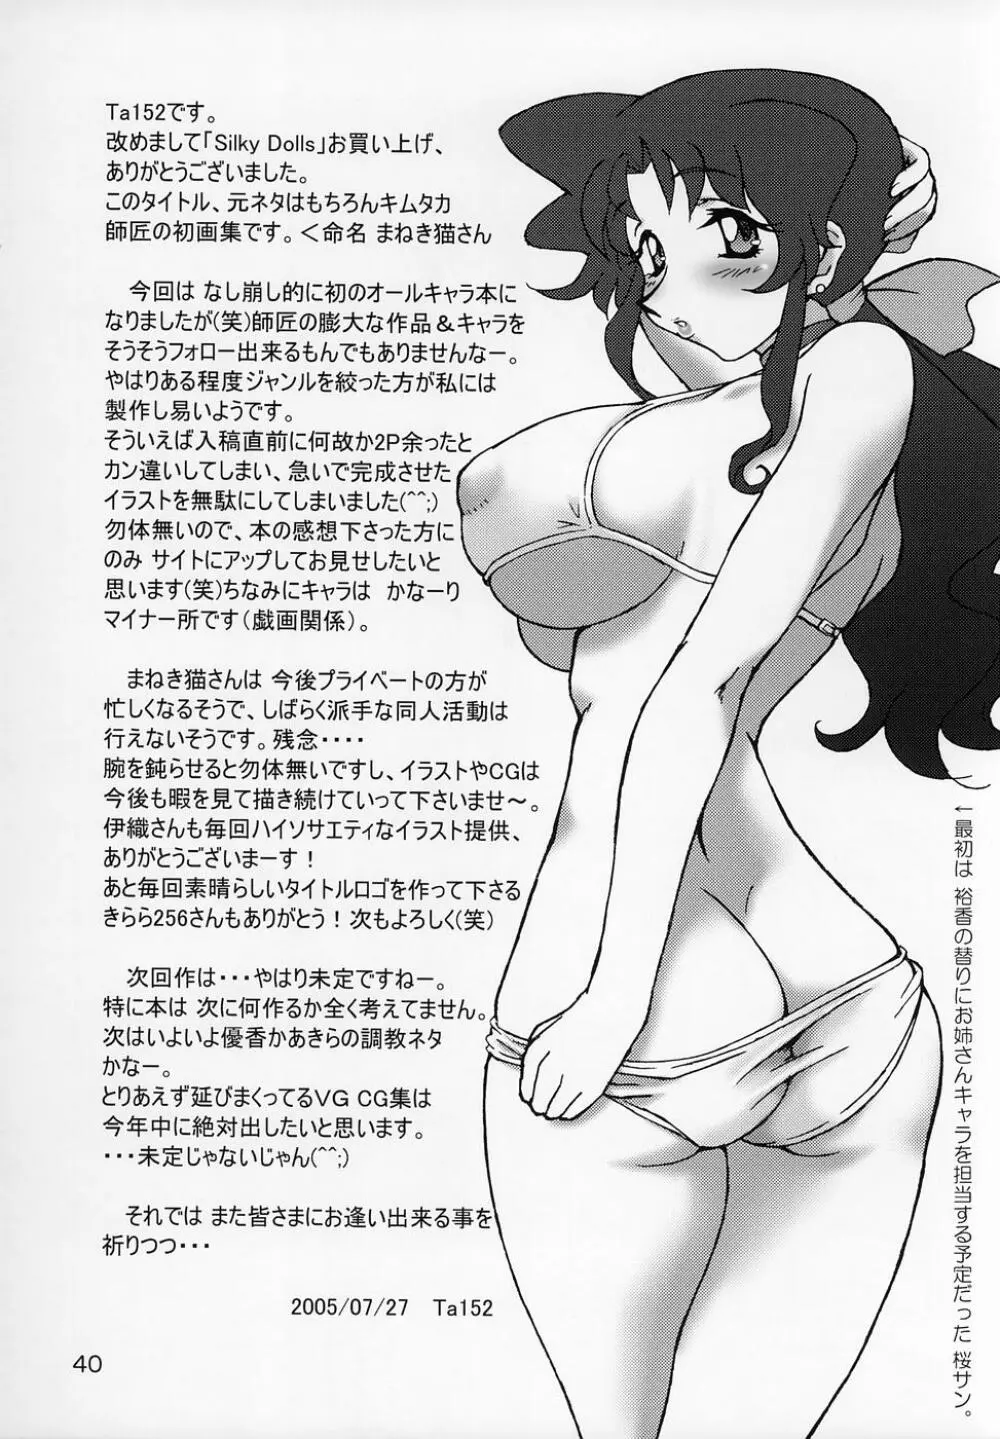 Silky Dolls KimuTaka's Cutie Characters!! - page39